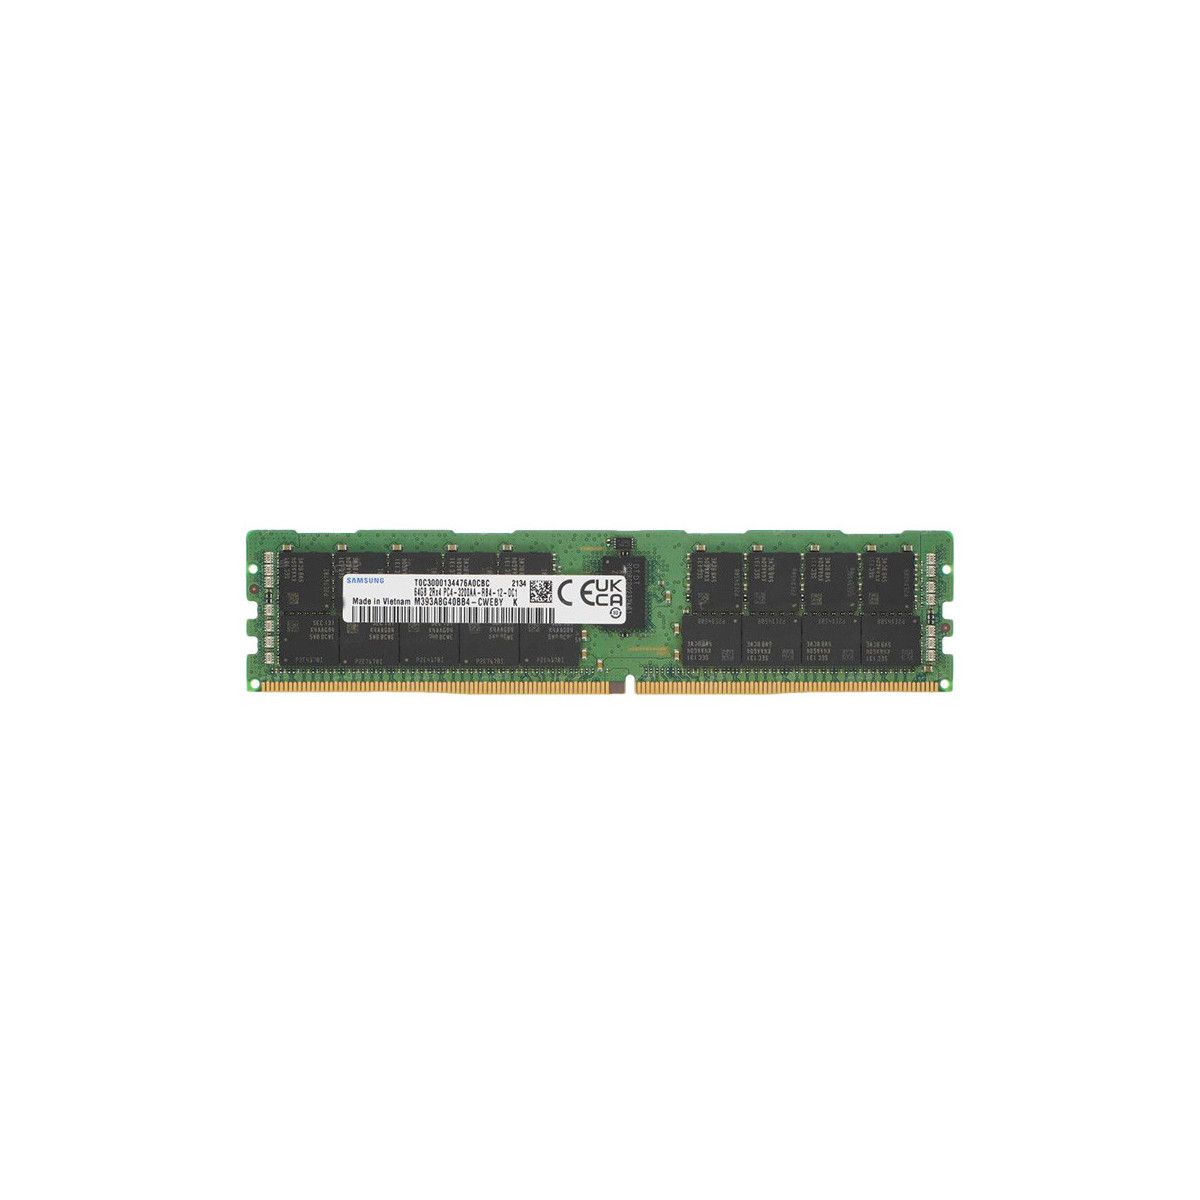 P2MYX-MS - Memstar 1x 64GB DDR4-3200 RDIMM PC4-25600R - Mem-Star Kompatybilna pamięć OEM 1 - Memstar 